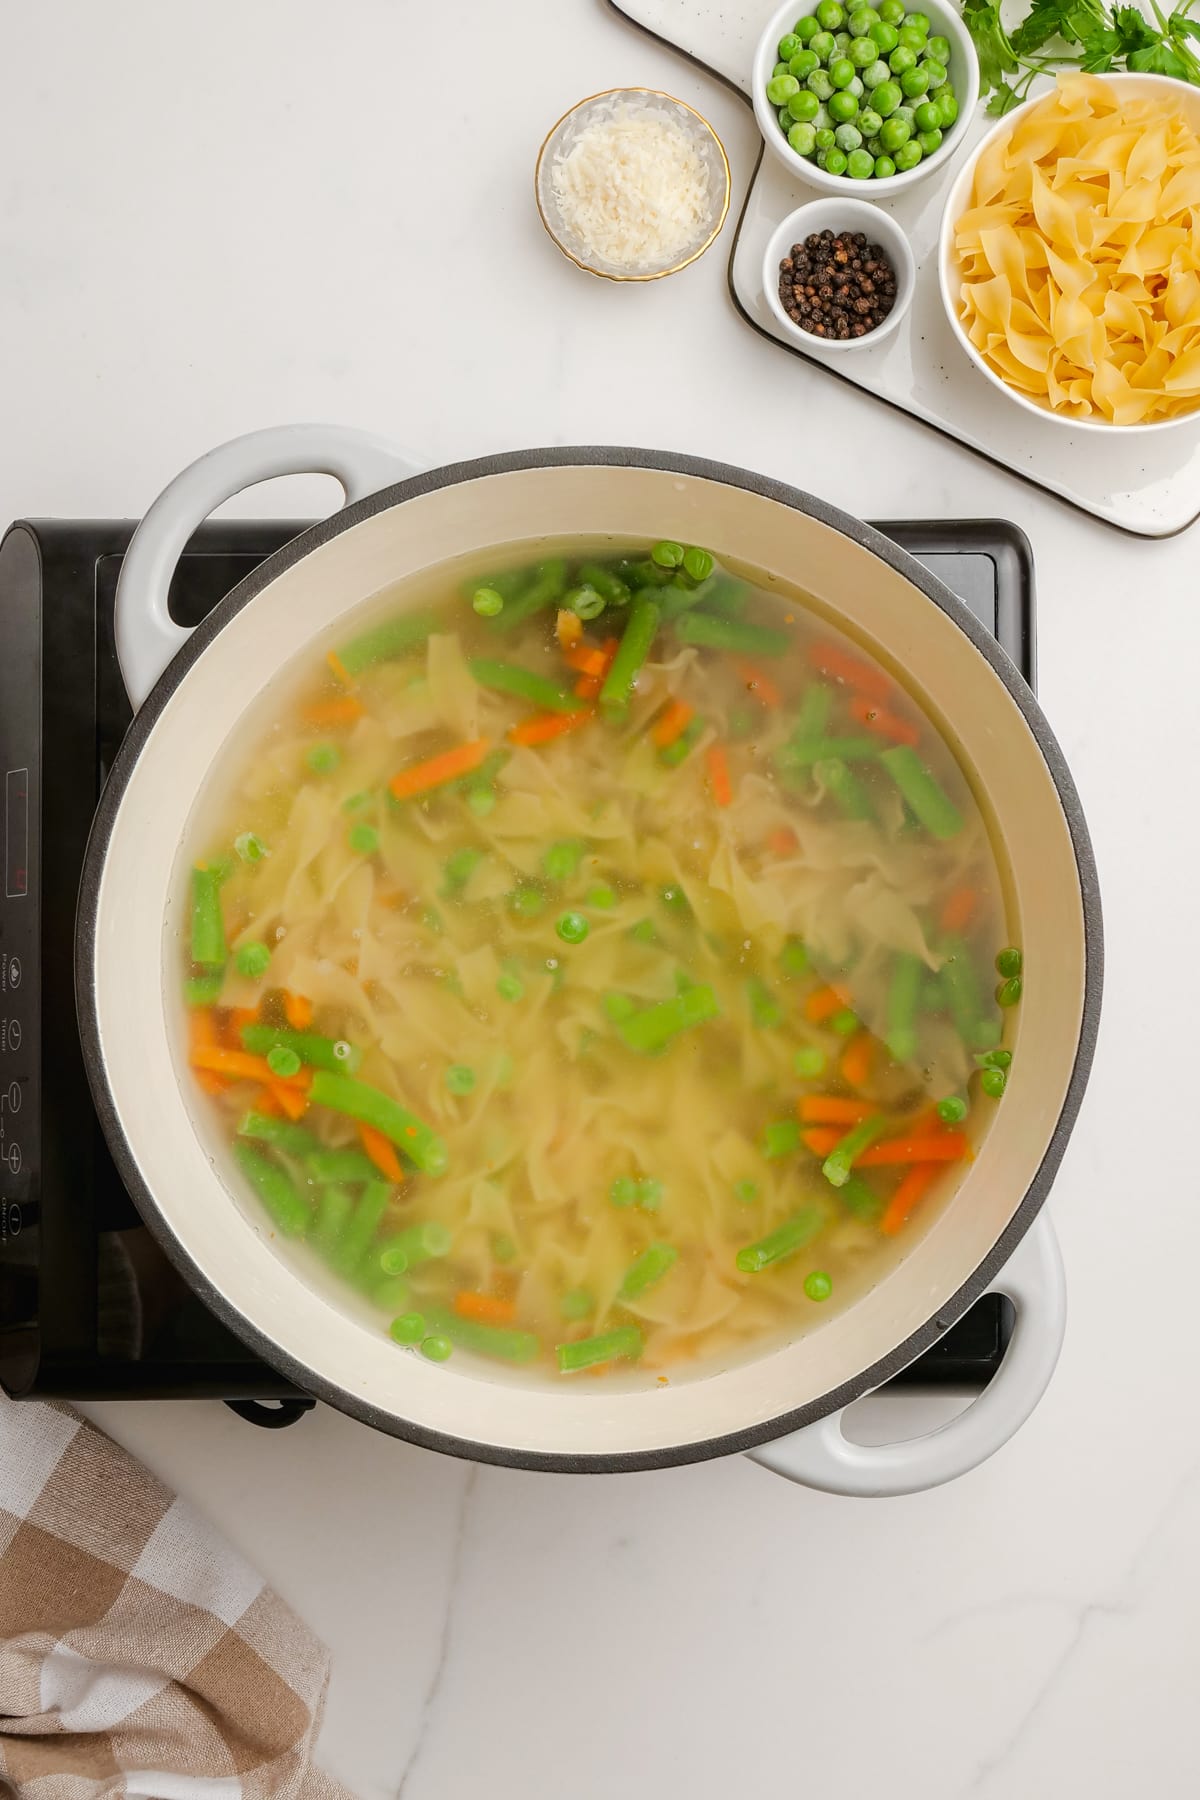 Tuna noodle casserole ingredients in pot